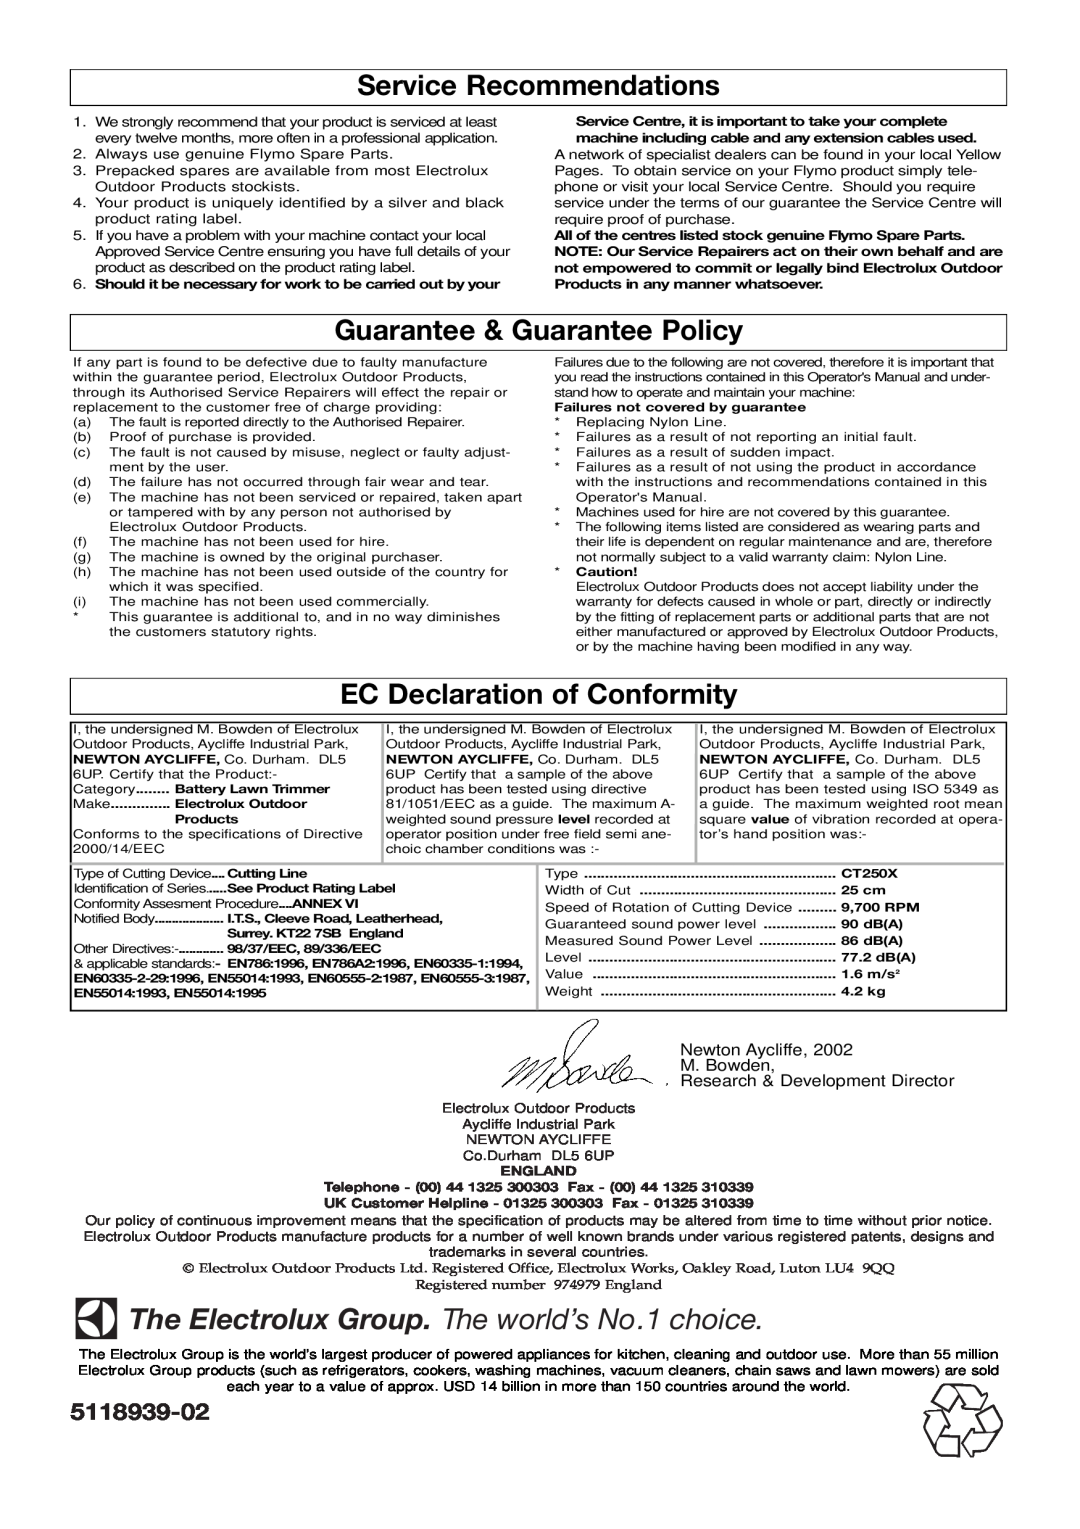 Flymo CT250 manual Service Recommendations, Guarantee & Guarantee Policy, EC Declaration of Conformity, 5118939-02, England 